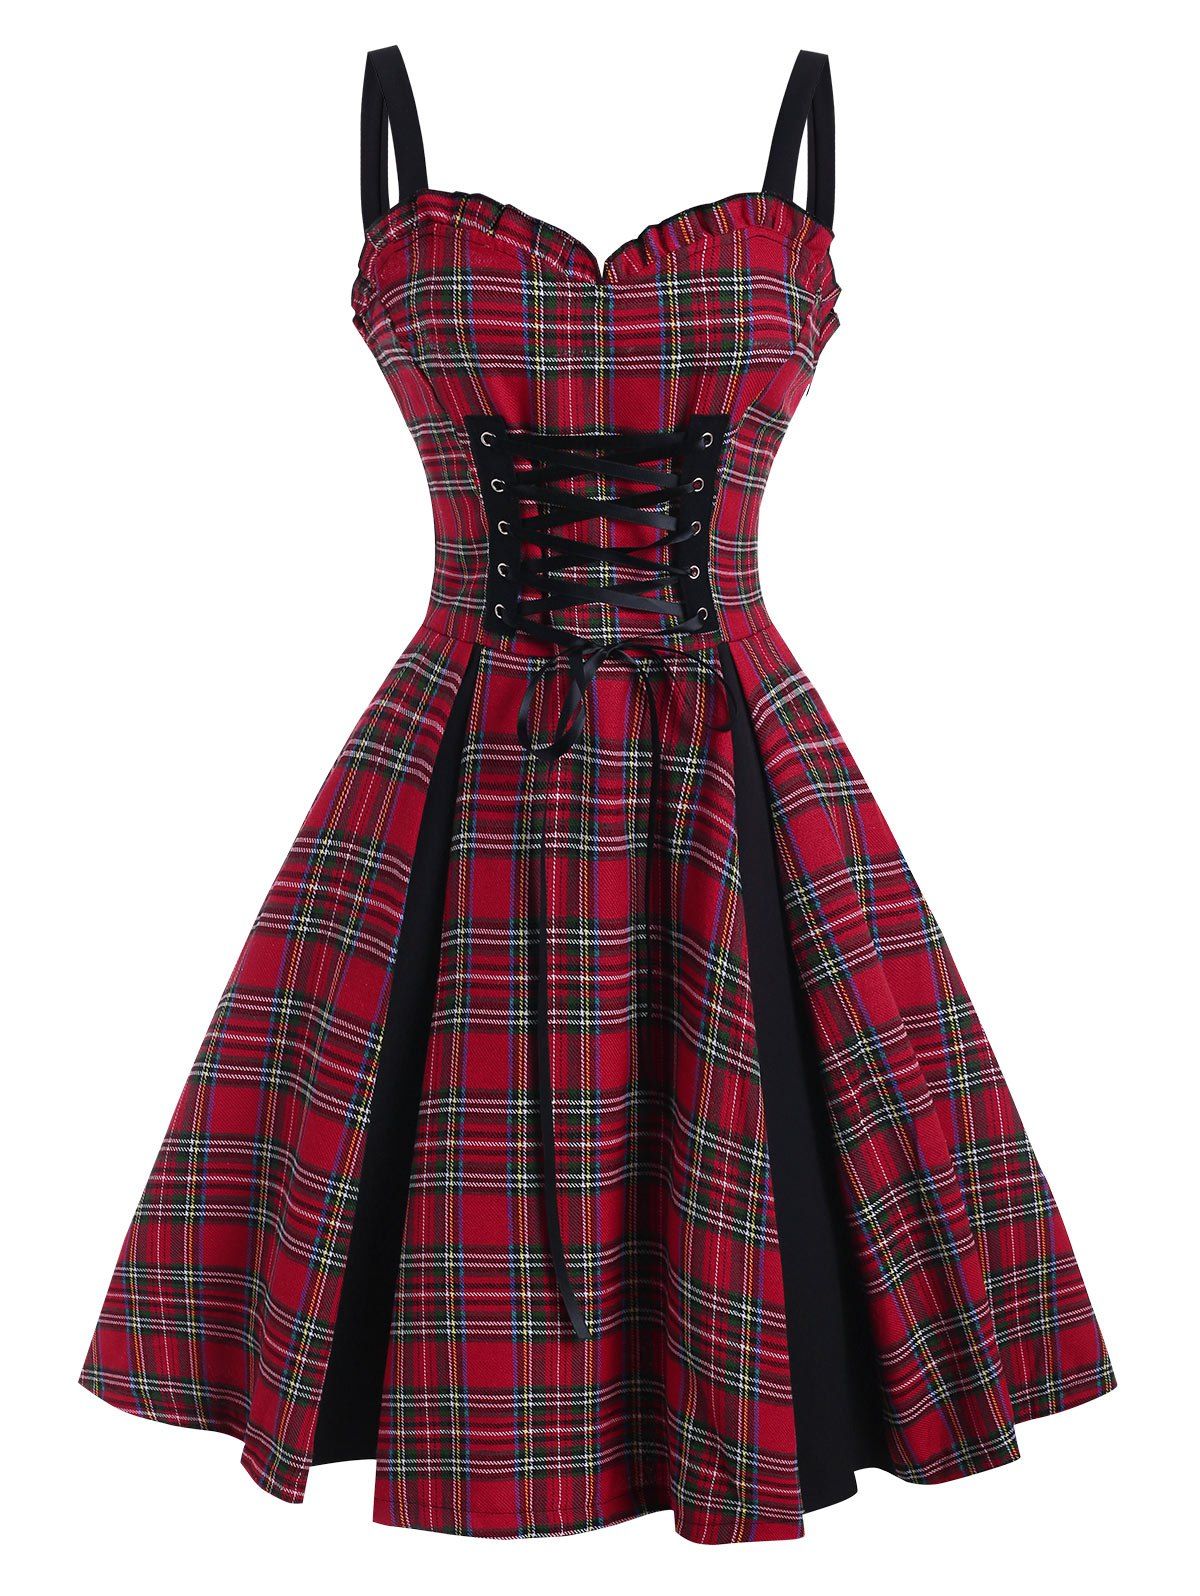 Summer Plaid Lace Up Corset Style Ruffle Sweetheart Dress - RED XXL